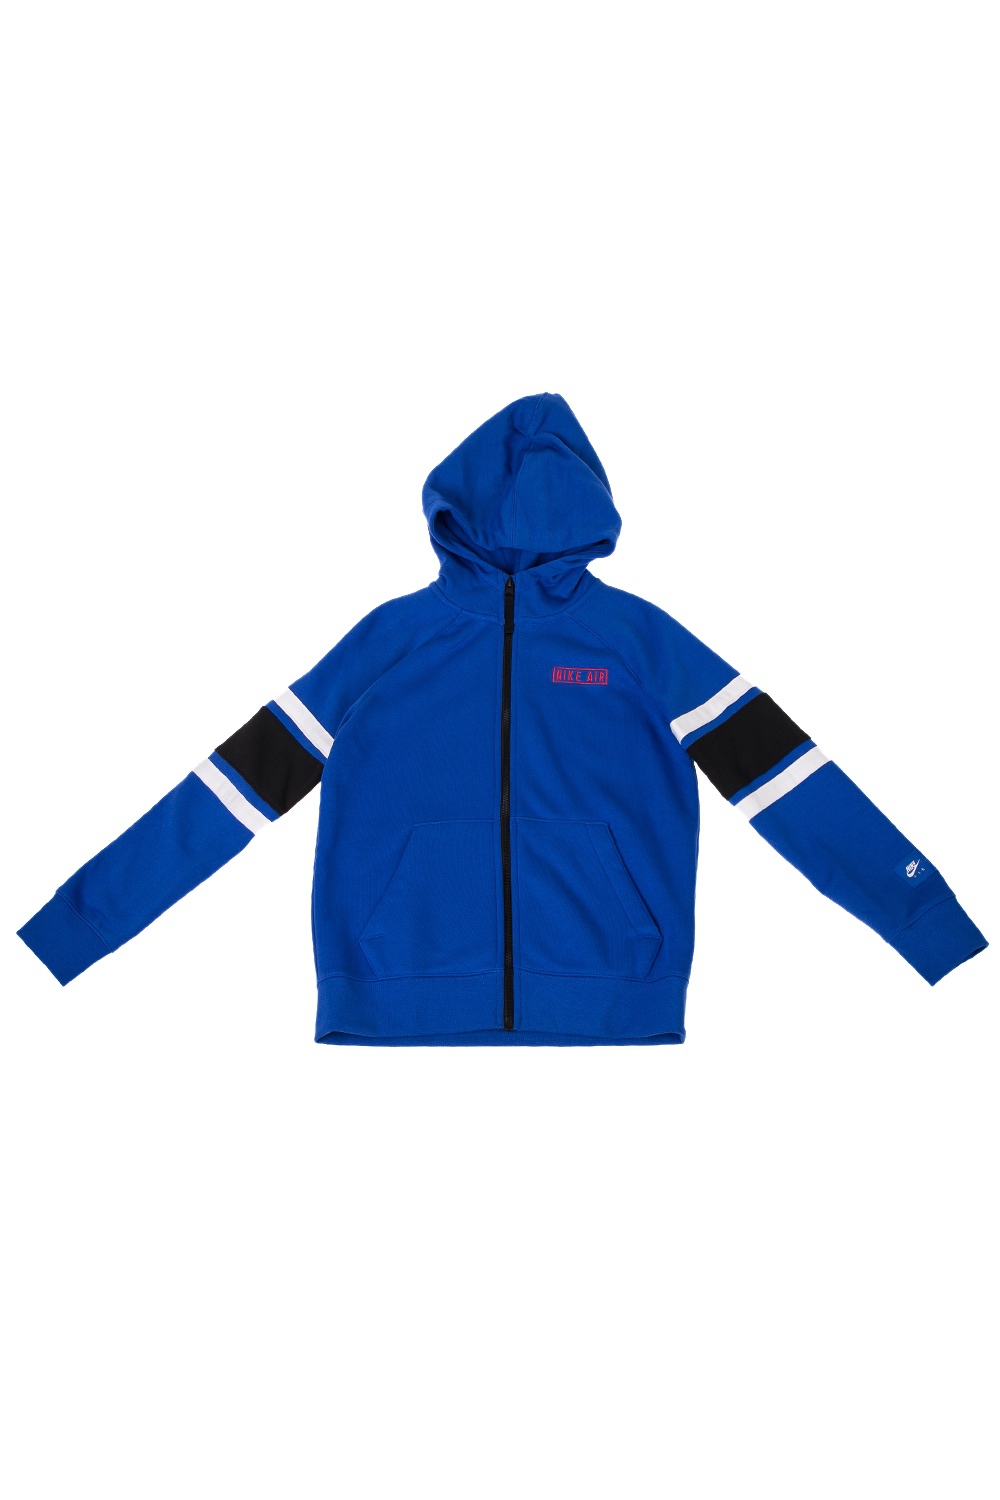 NIKE - Παιδική φούτερ ζακέτα NIKE AIR HOODIE μπλε Παιδικά/Boys/Ρούχα/Αθλητικά